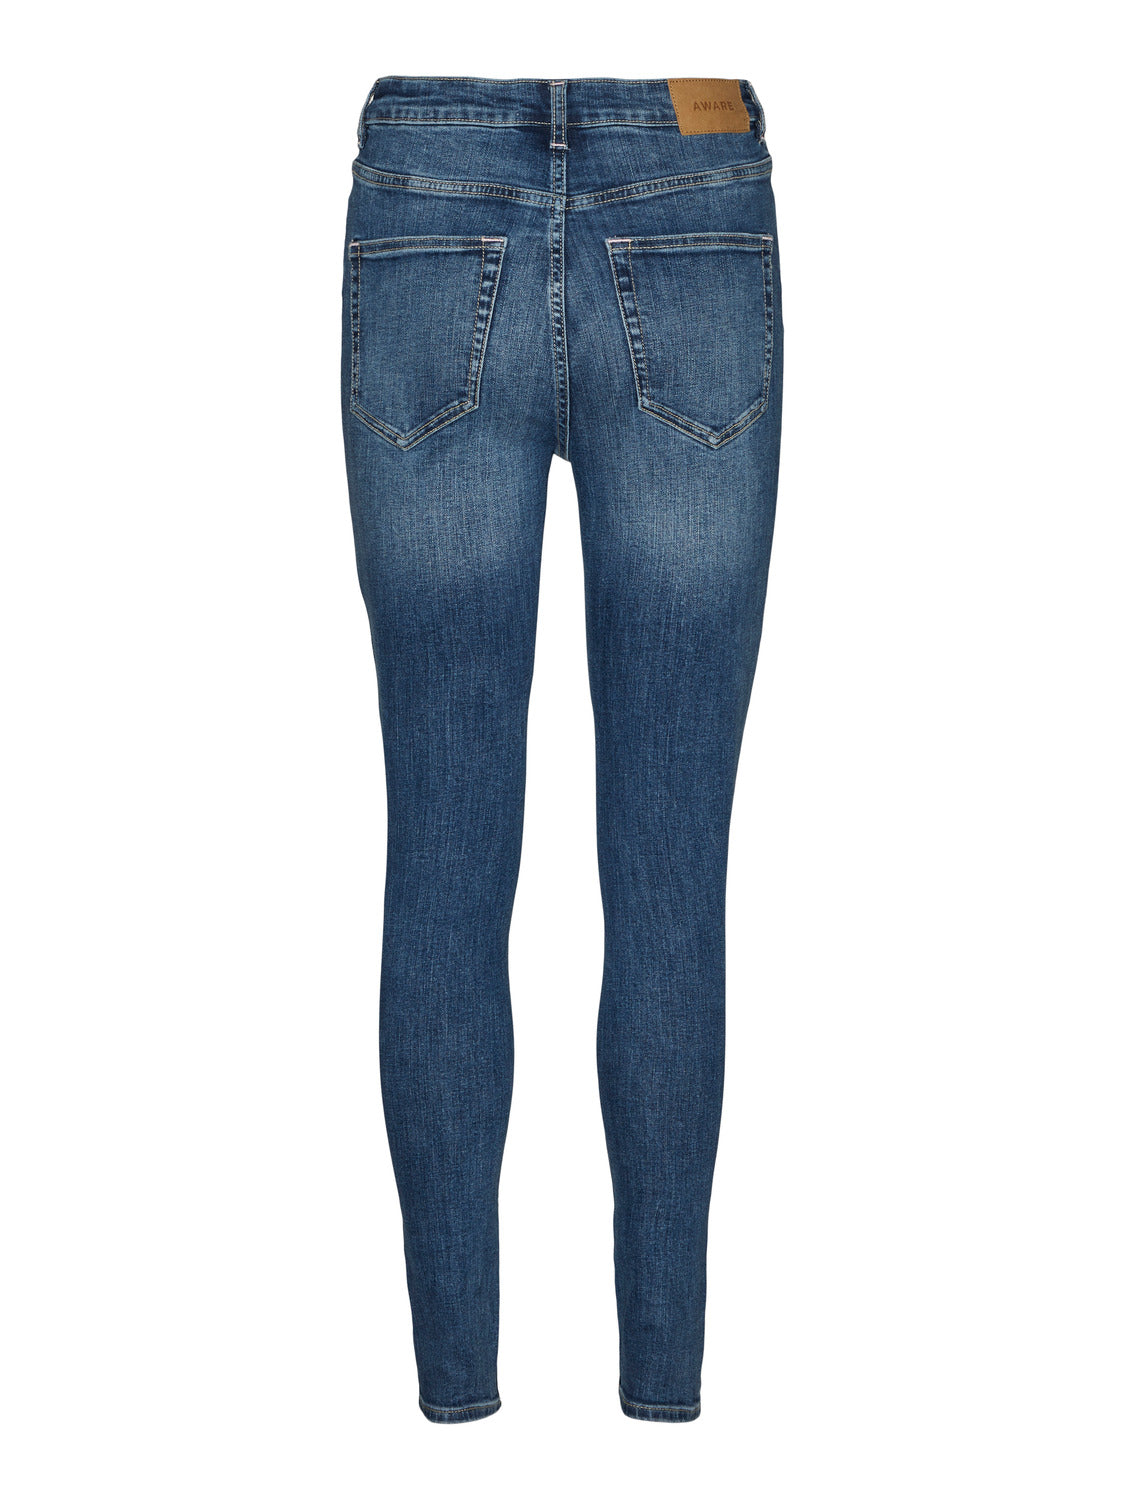 VMLOA Jeans - Medium Blue Denim